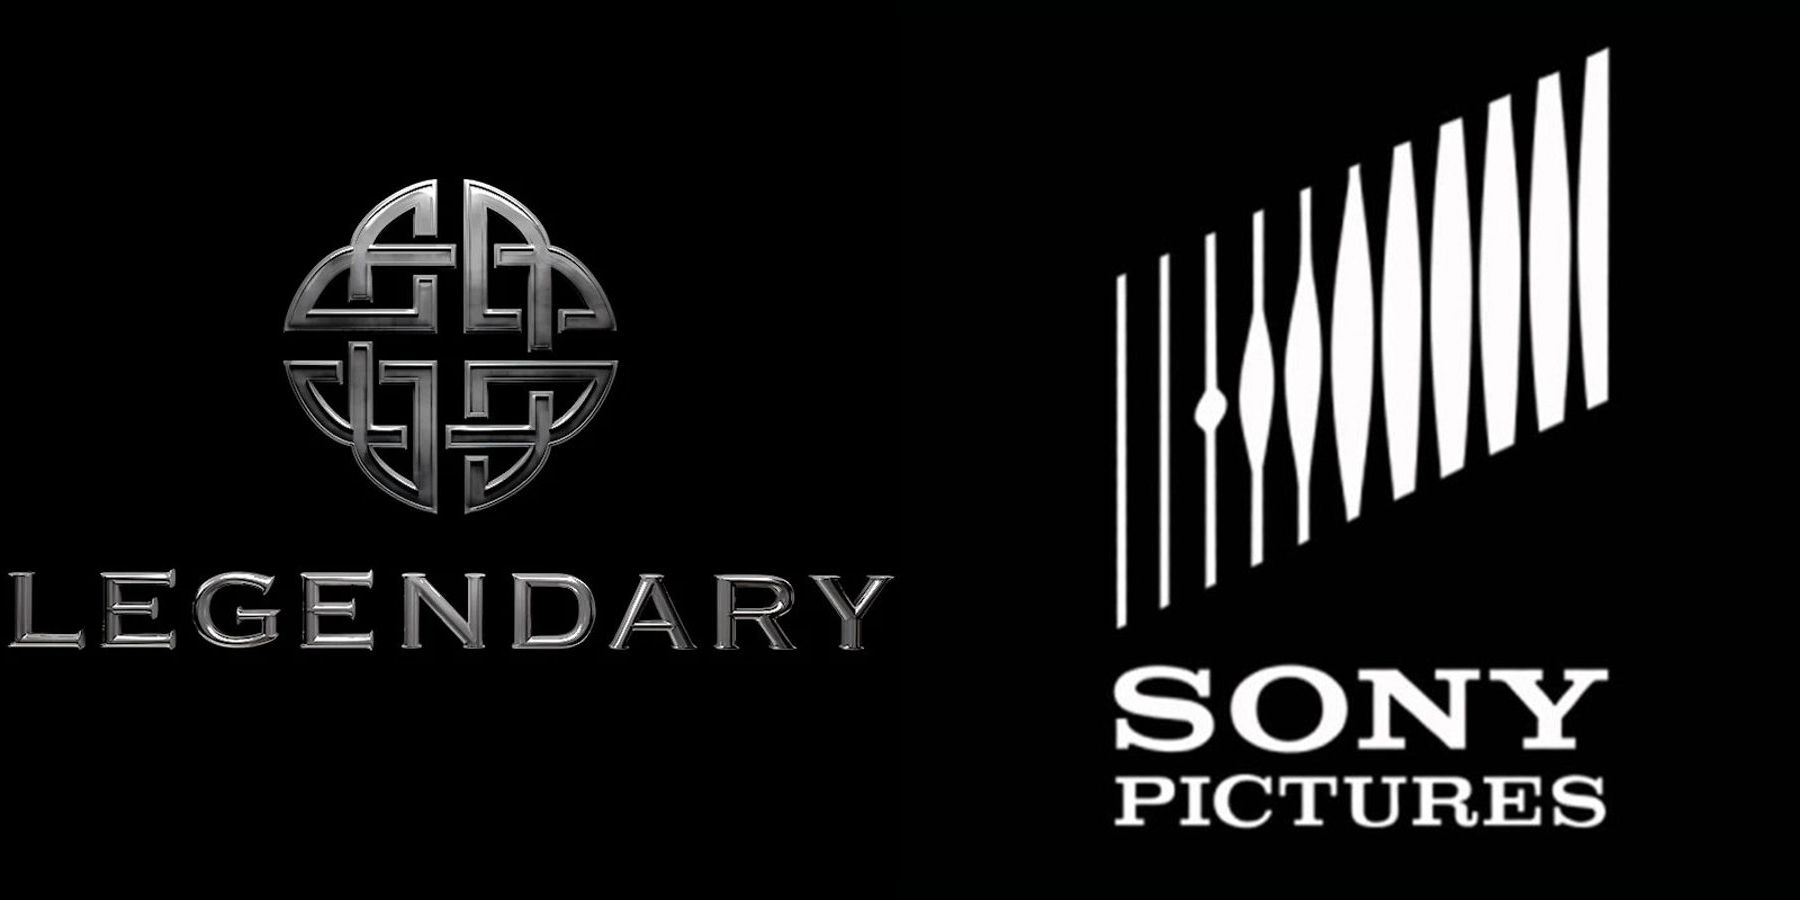 Sony Pictures Legendary Entertainment